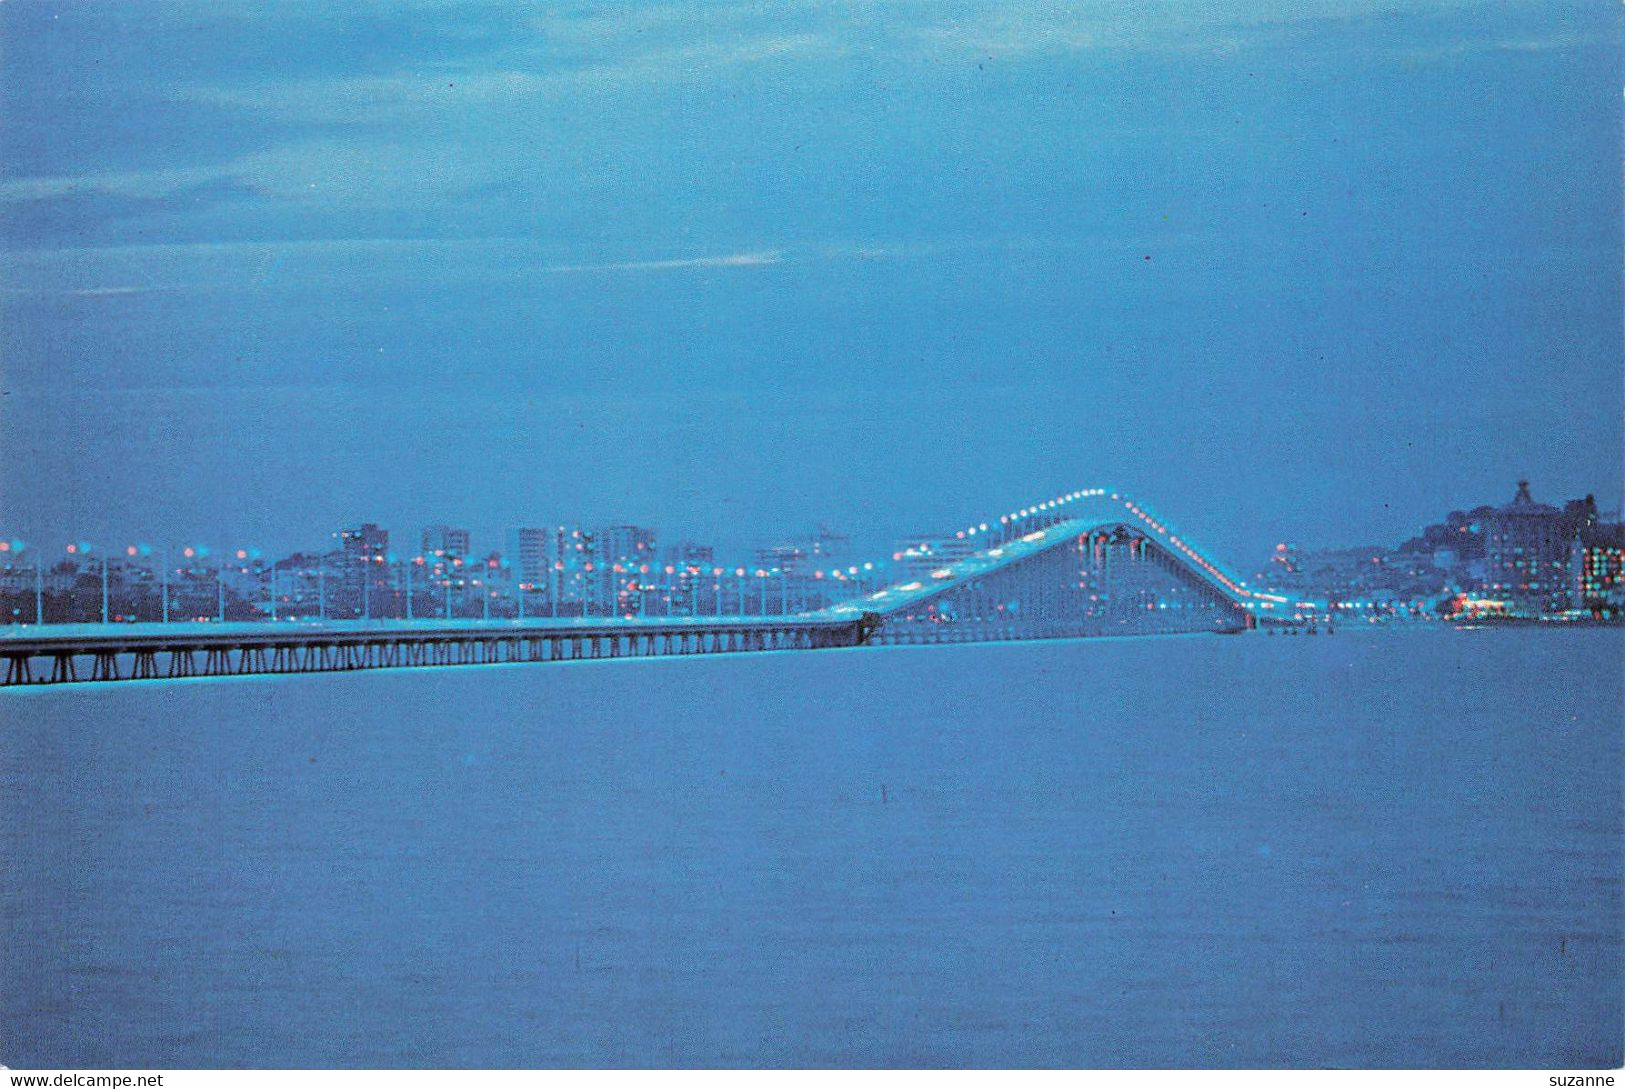 MACAO - Bridge Linking MACAU & TAIPA -  1004 - China